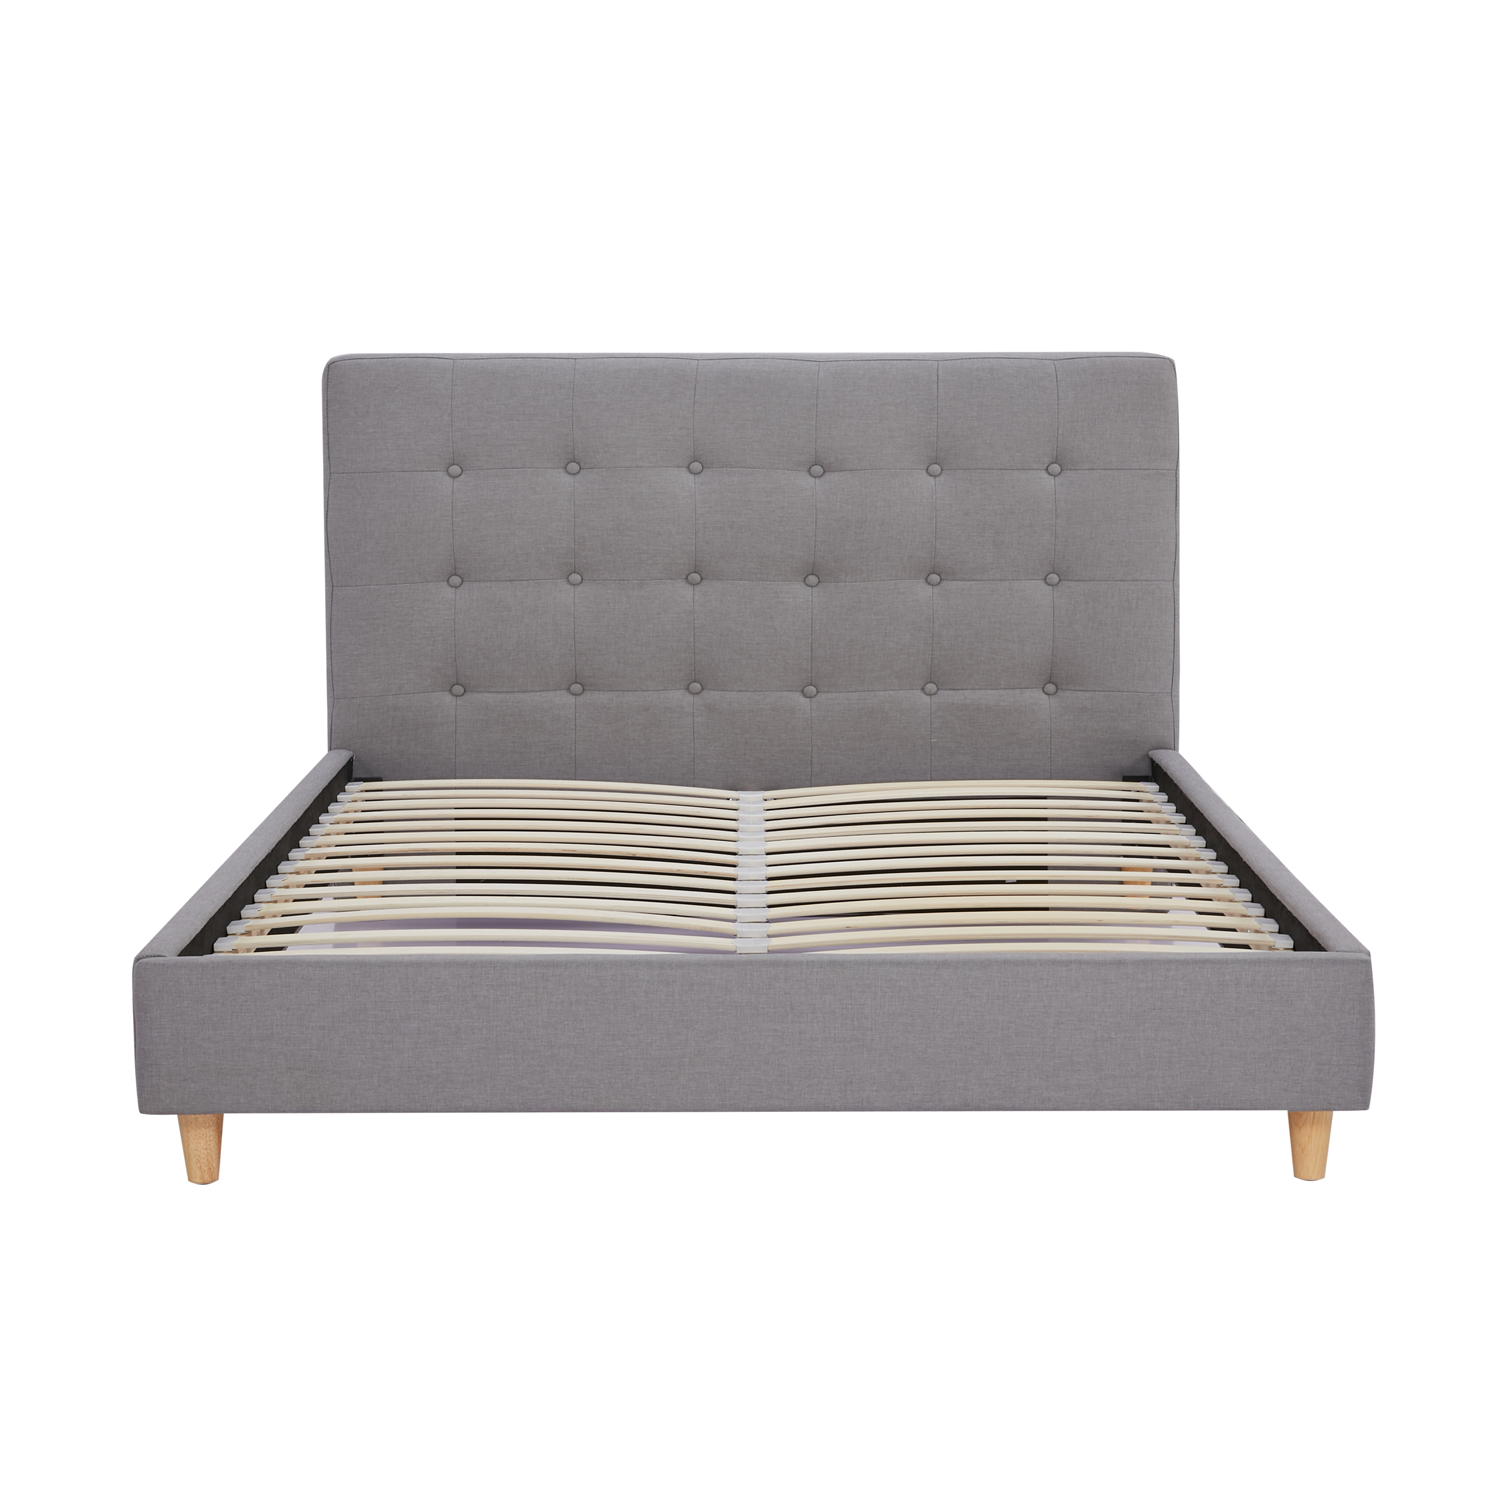 Lamden Tufted Bed Queen (Gray) - Furniture Source Philippines